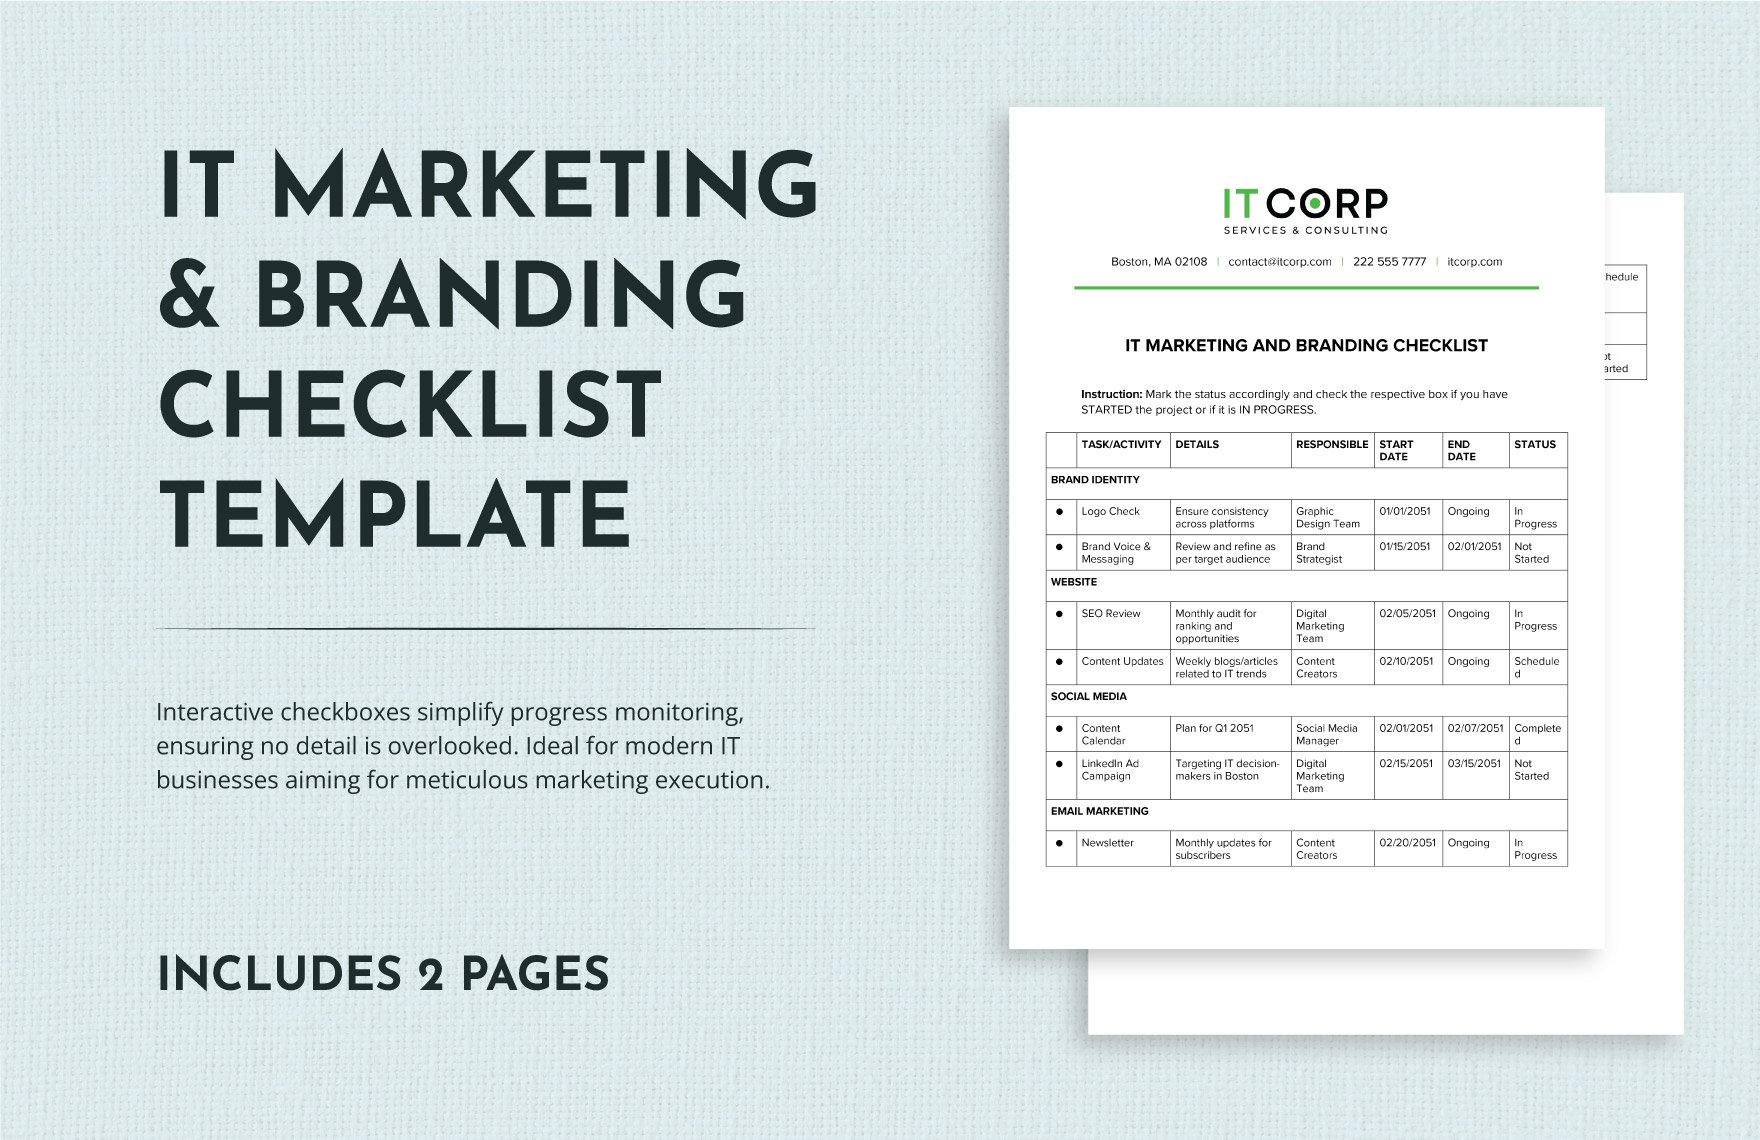 IT Marketing & Branding Checklist Template